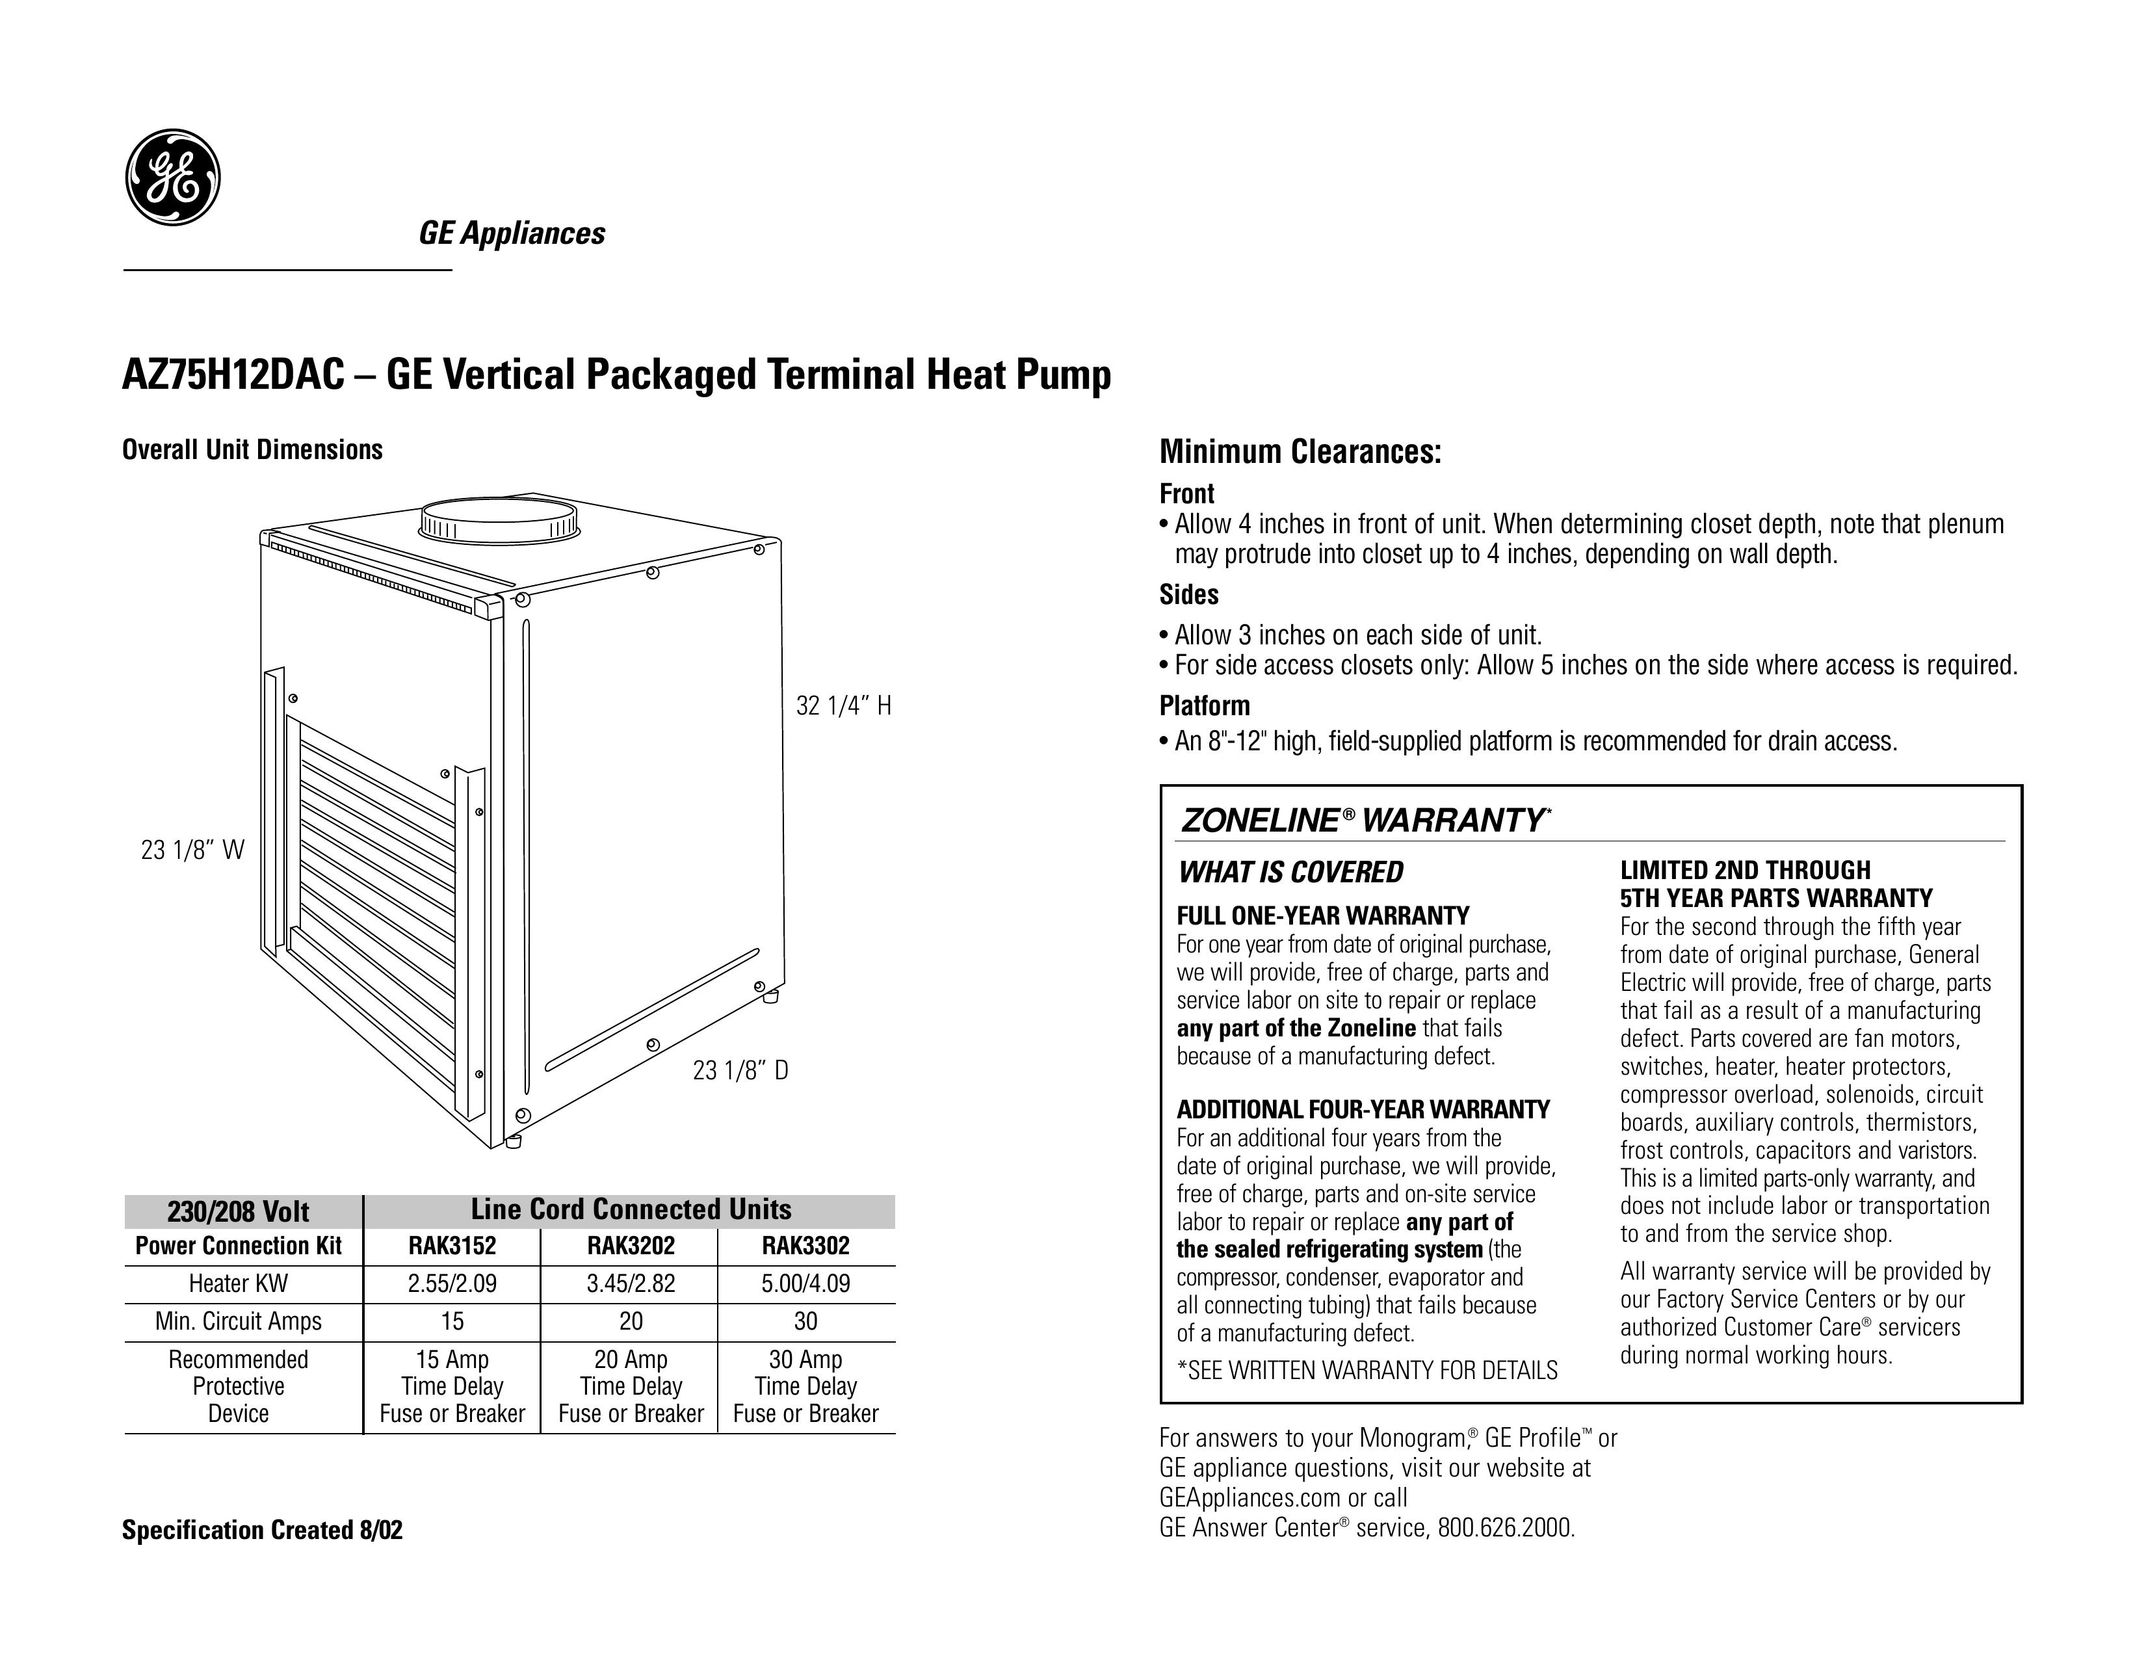 GE AZ75H12DAC Heat Pump User Manual